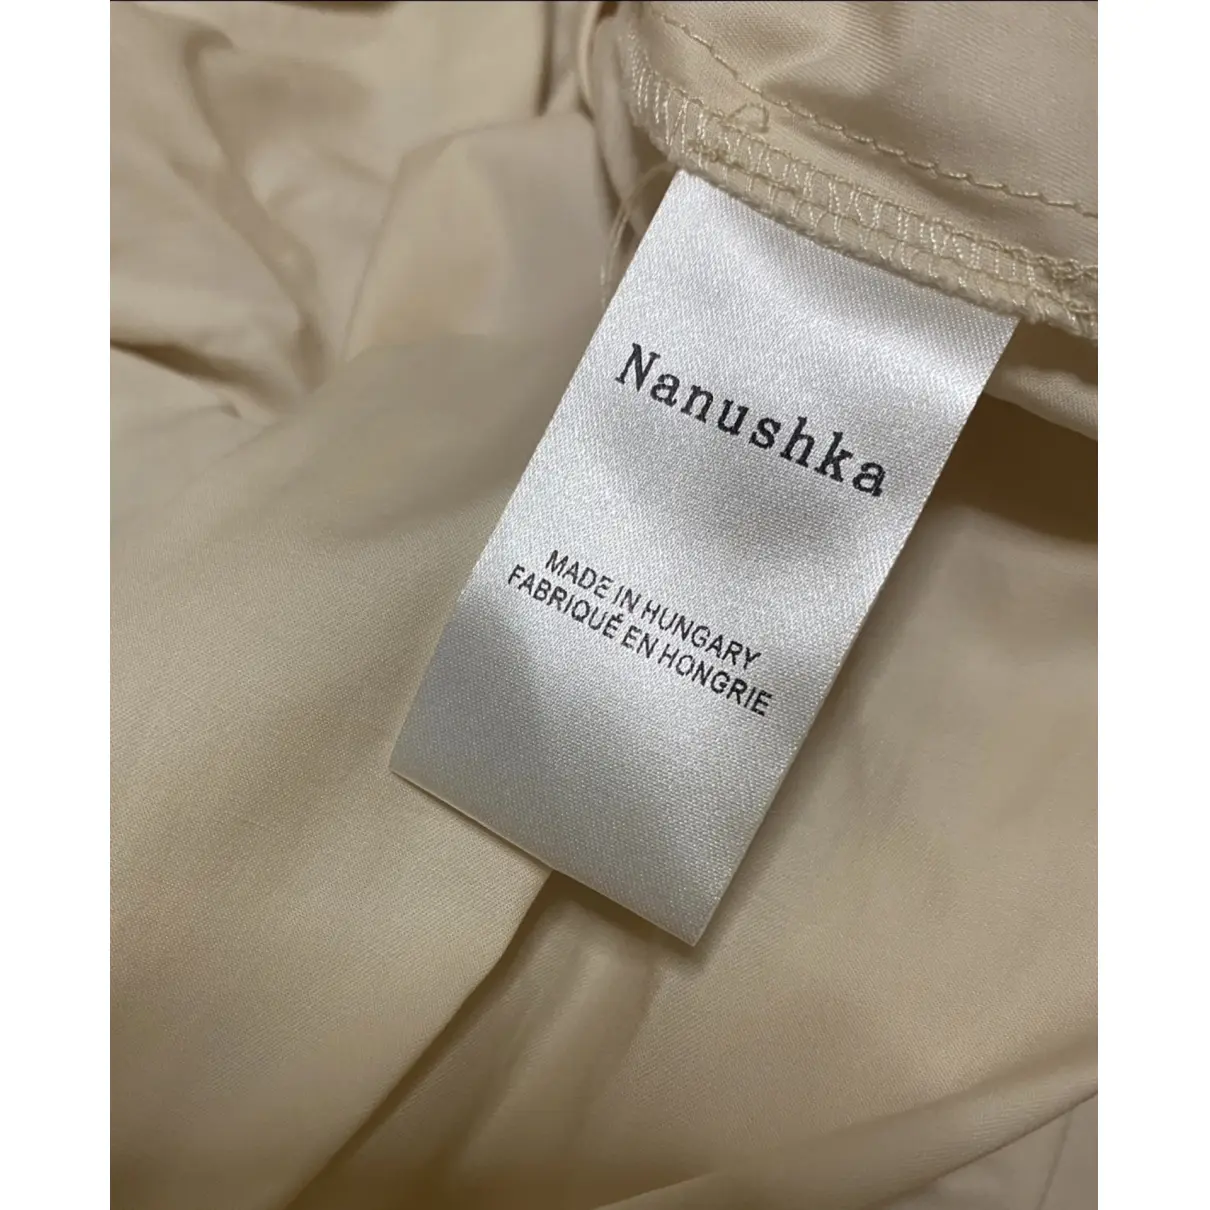 Buy Nanushka Maxi dress online